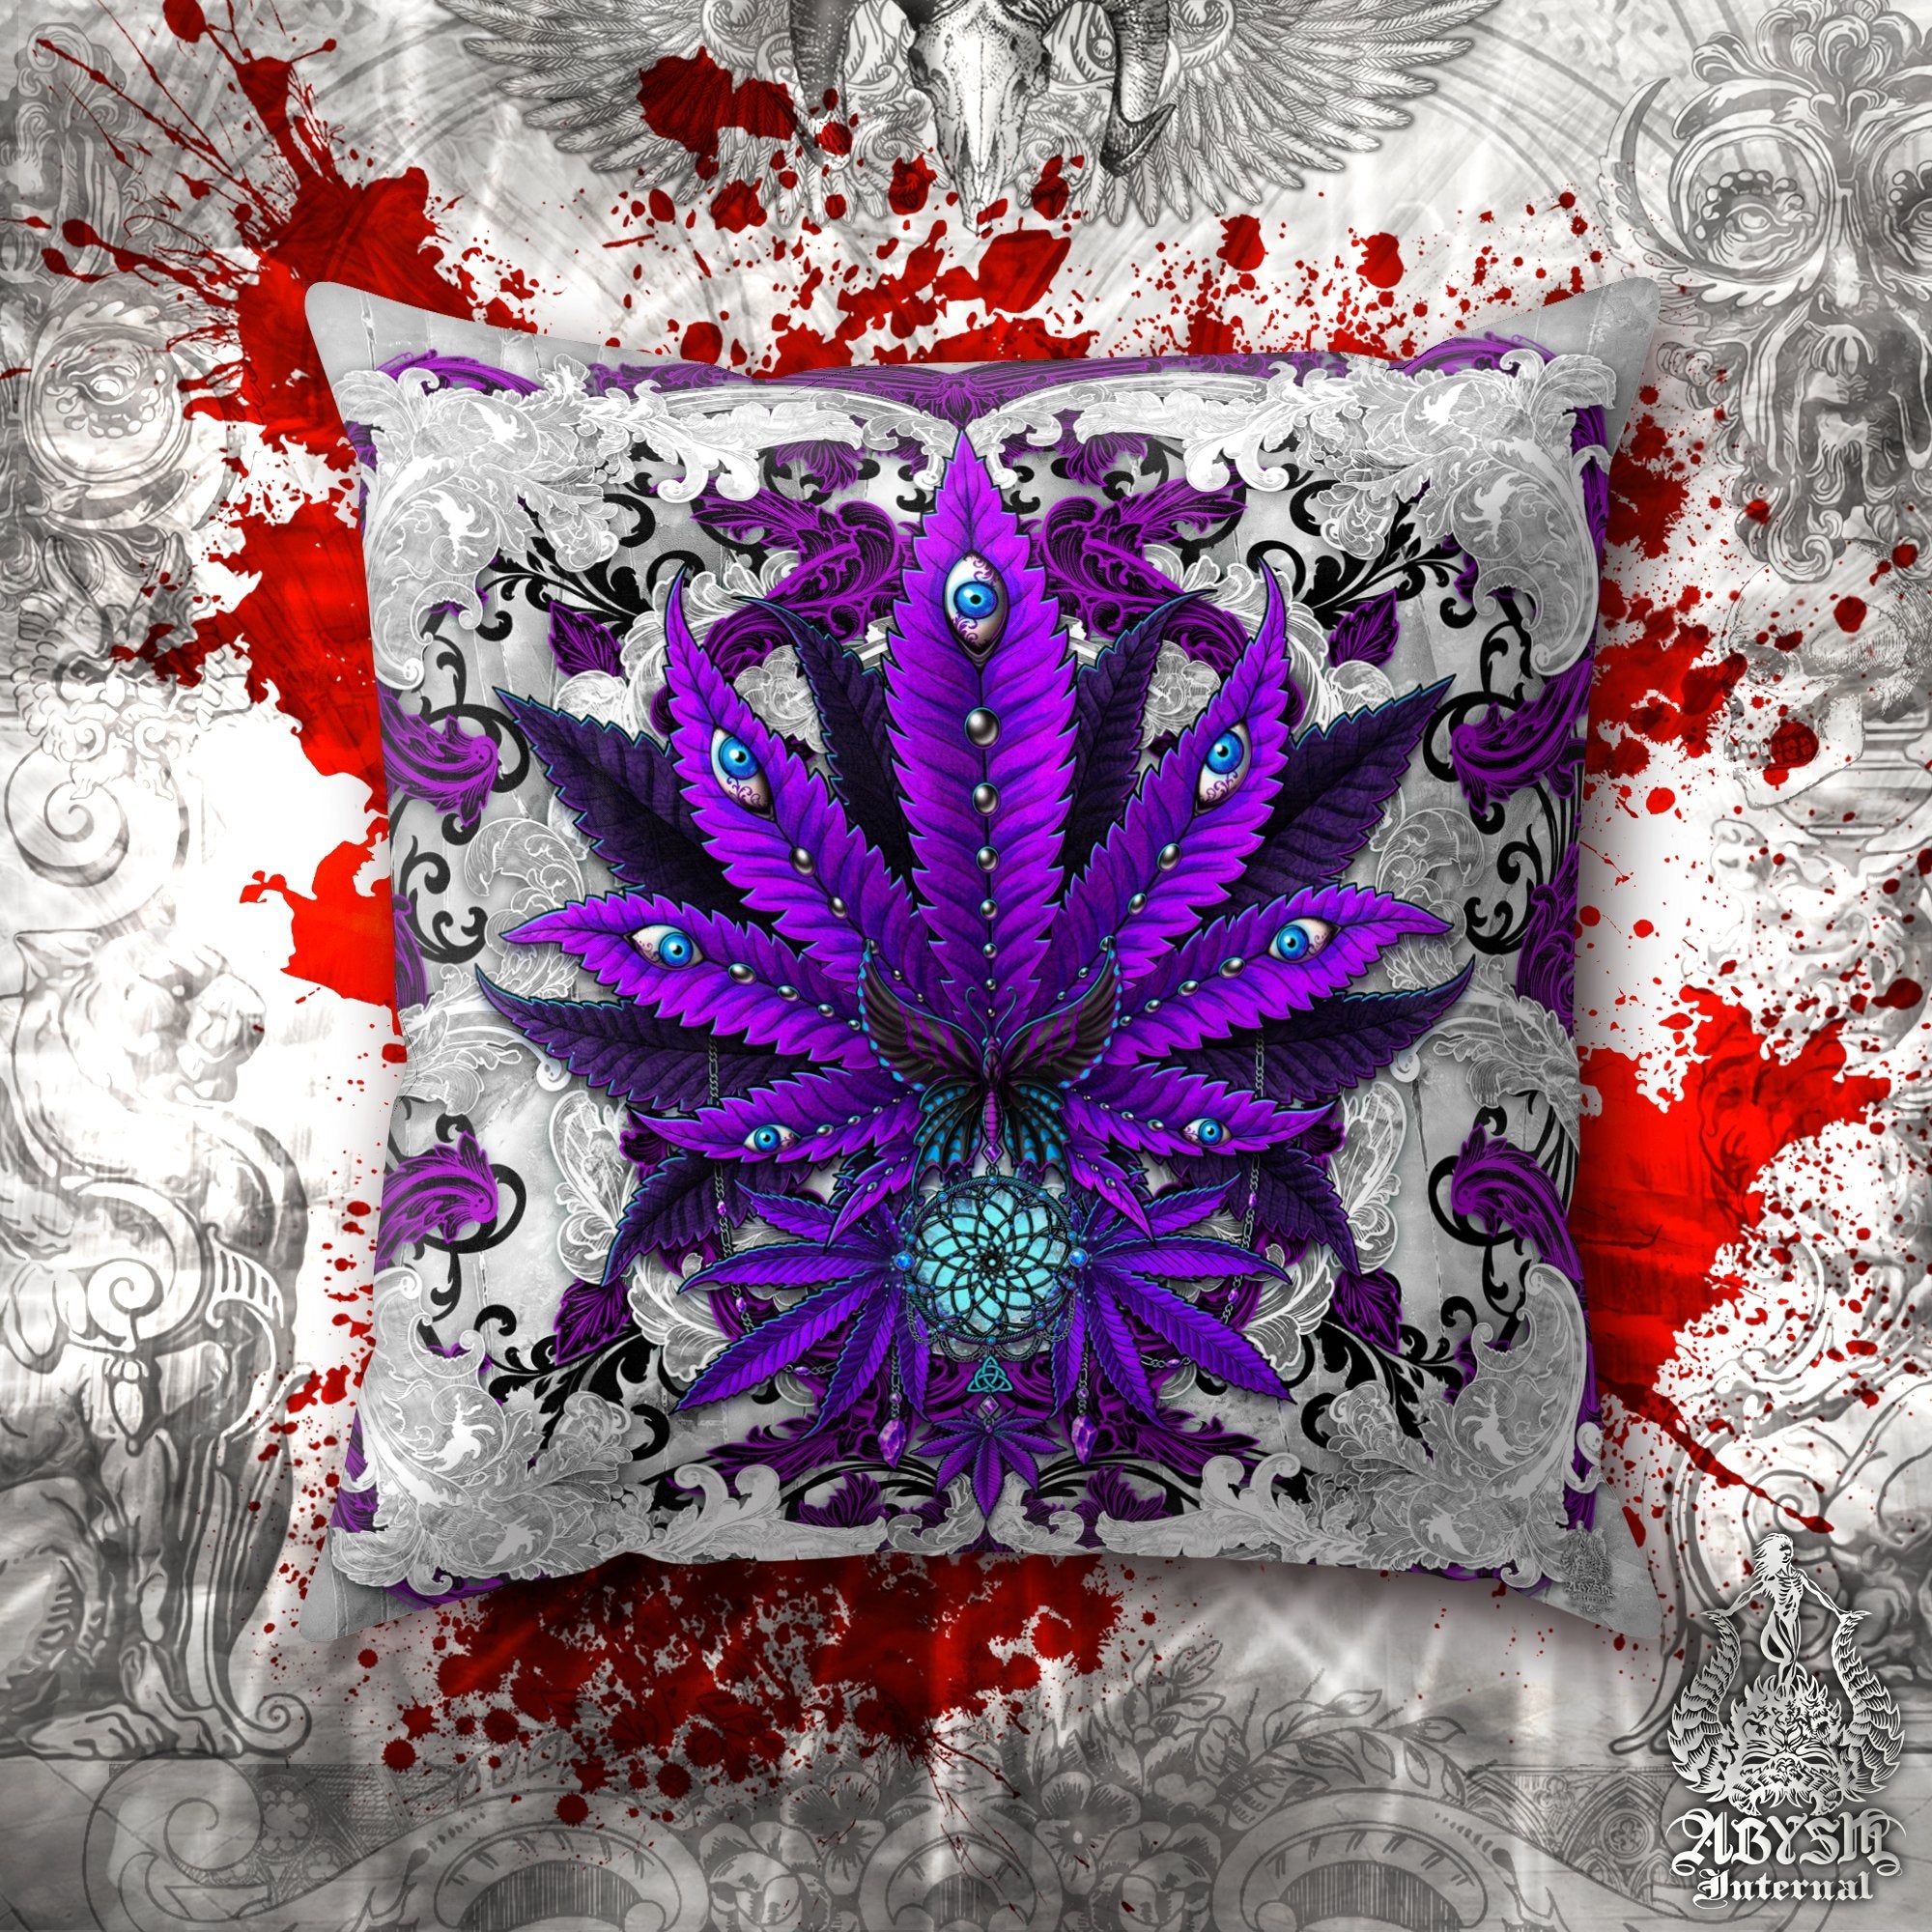 Weed Throw Pillow, Cannabis Shop Decor, Decorative Accent Cushion, Alternative Room Decor, 420 Art Print - Purple White Goth - Abysm Internal